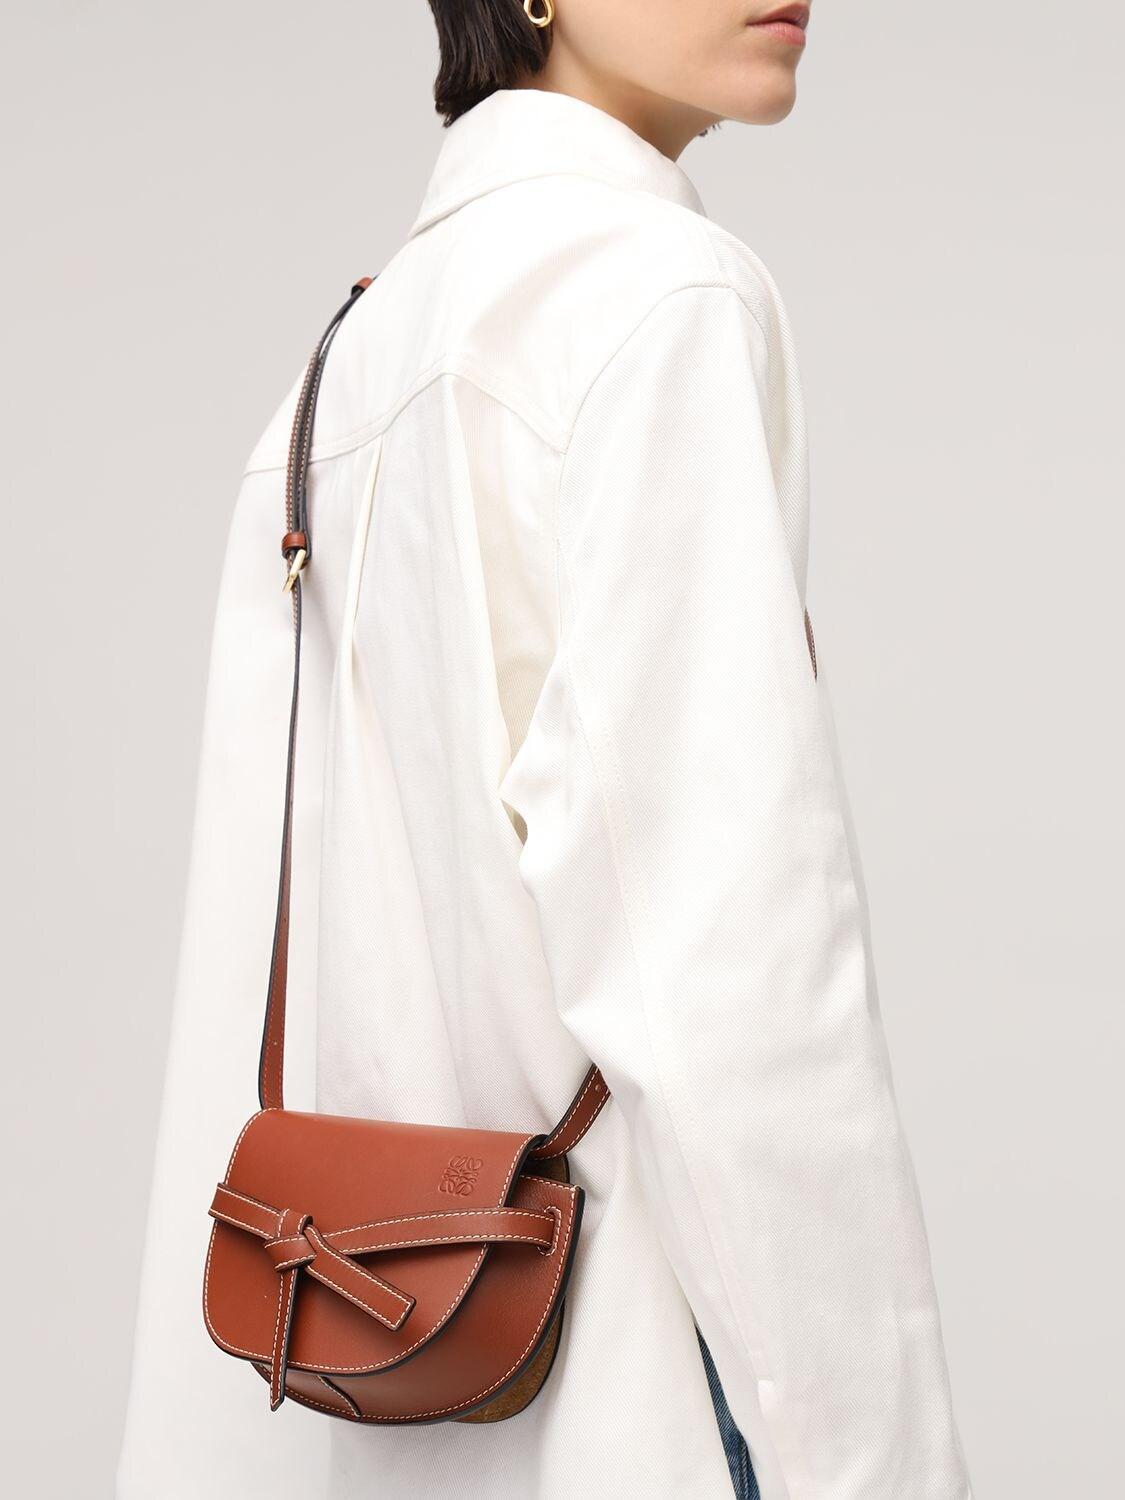 Loewe Gate Dual Mini Leather Bag in Rust (Brown) - Lyst